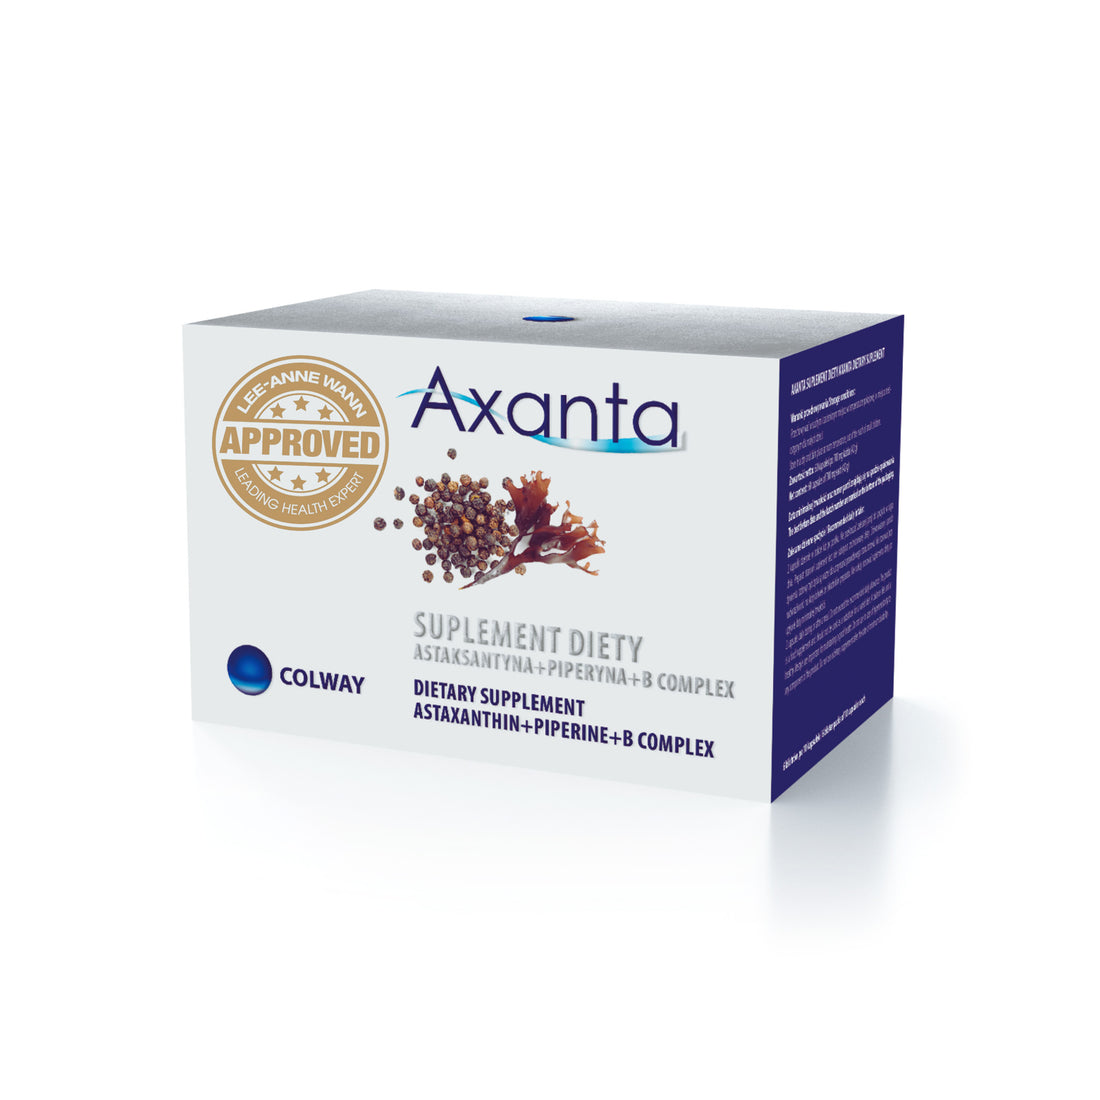 Axanta - A potent antioxidant for weight loss, stress management & immunity